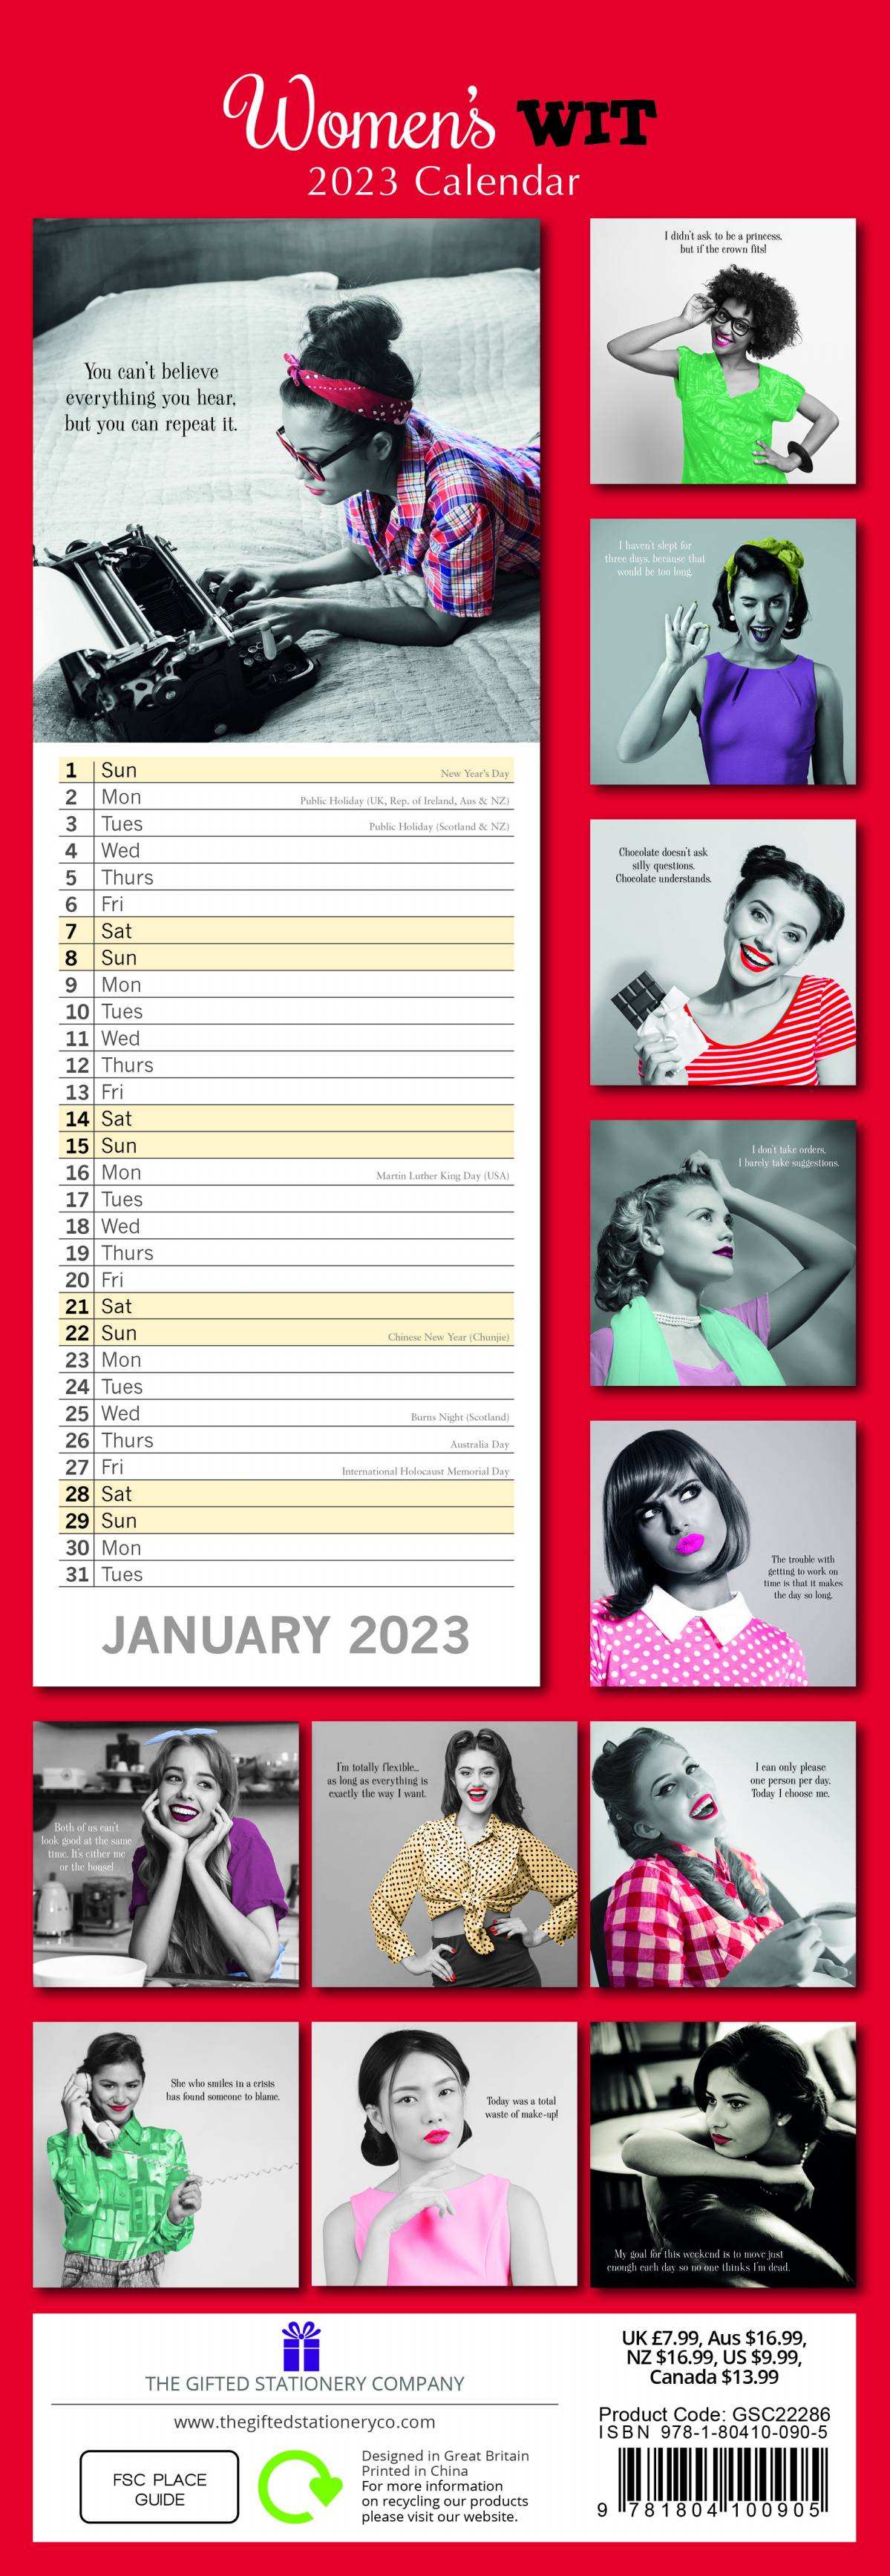 2023 Women's Wit - Slim Wall Calendar